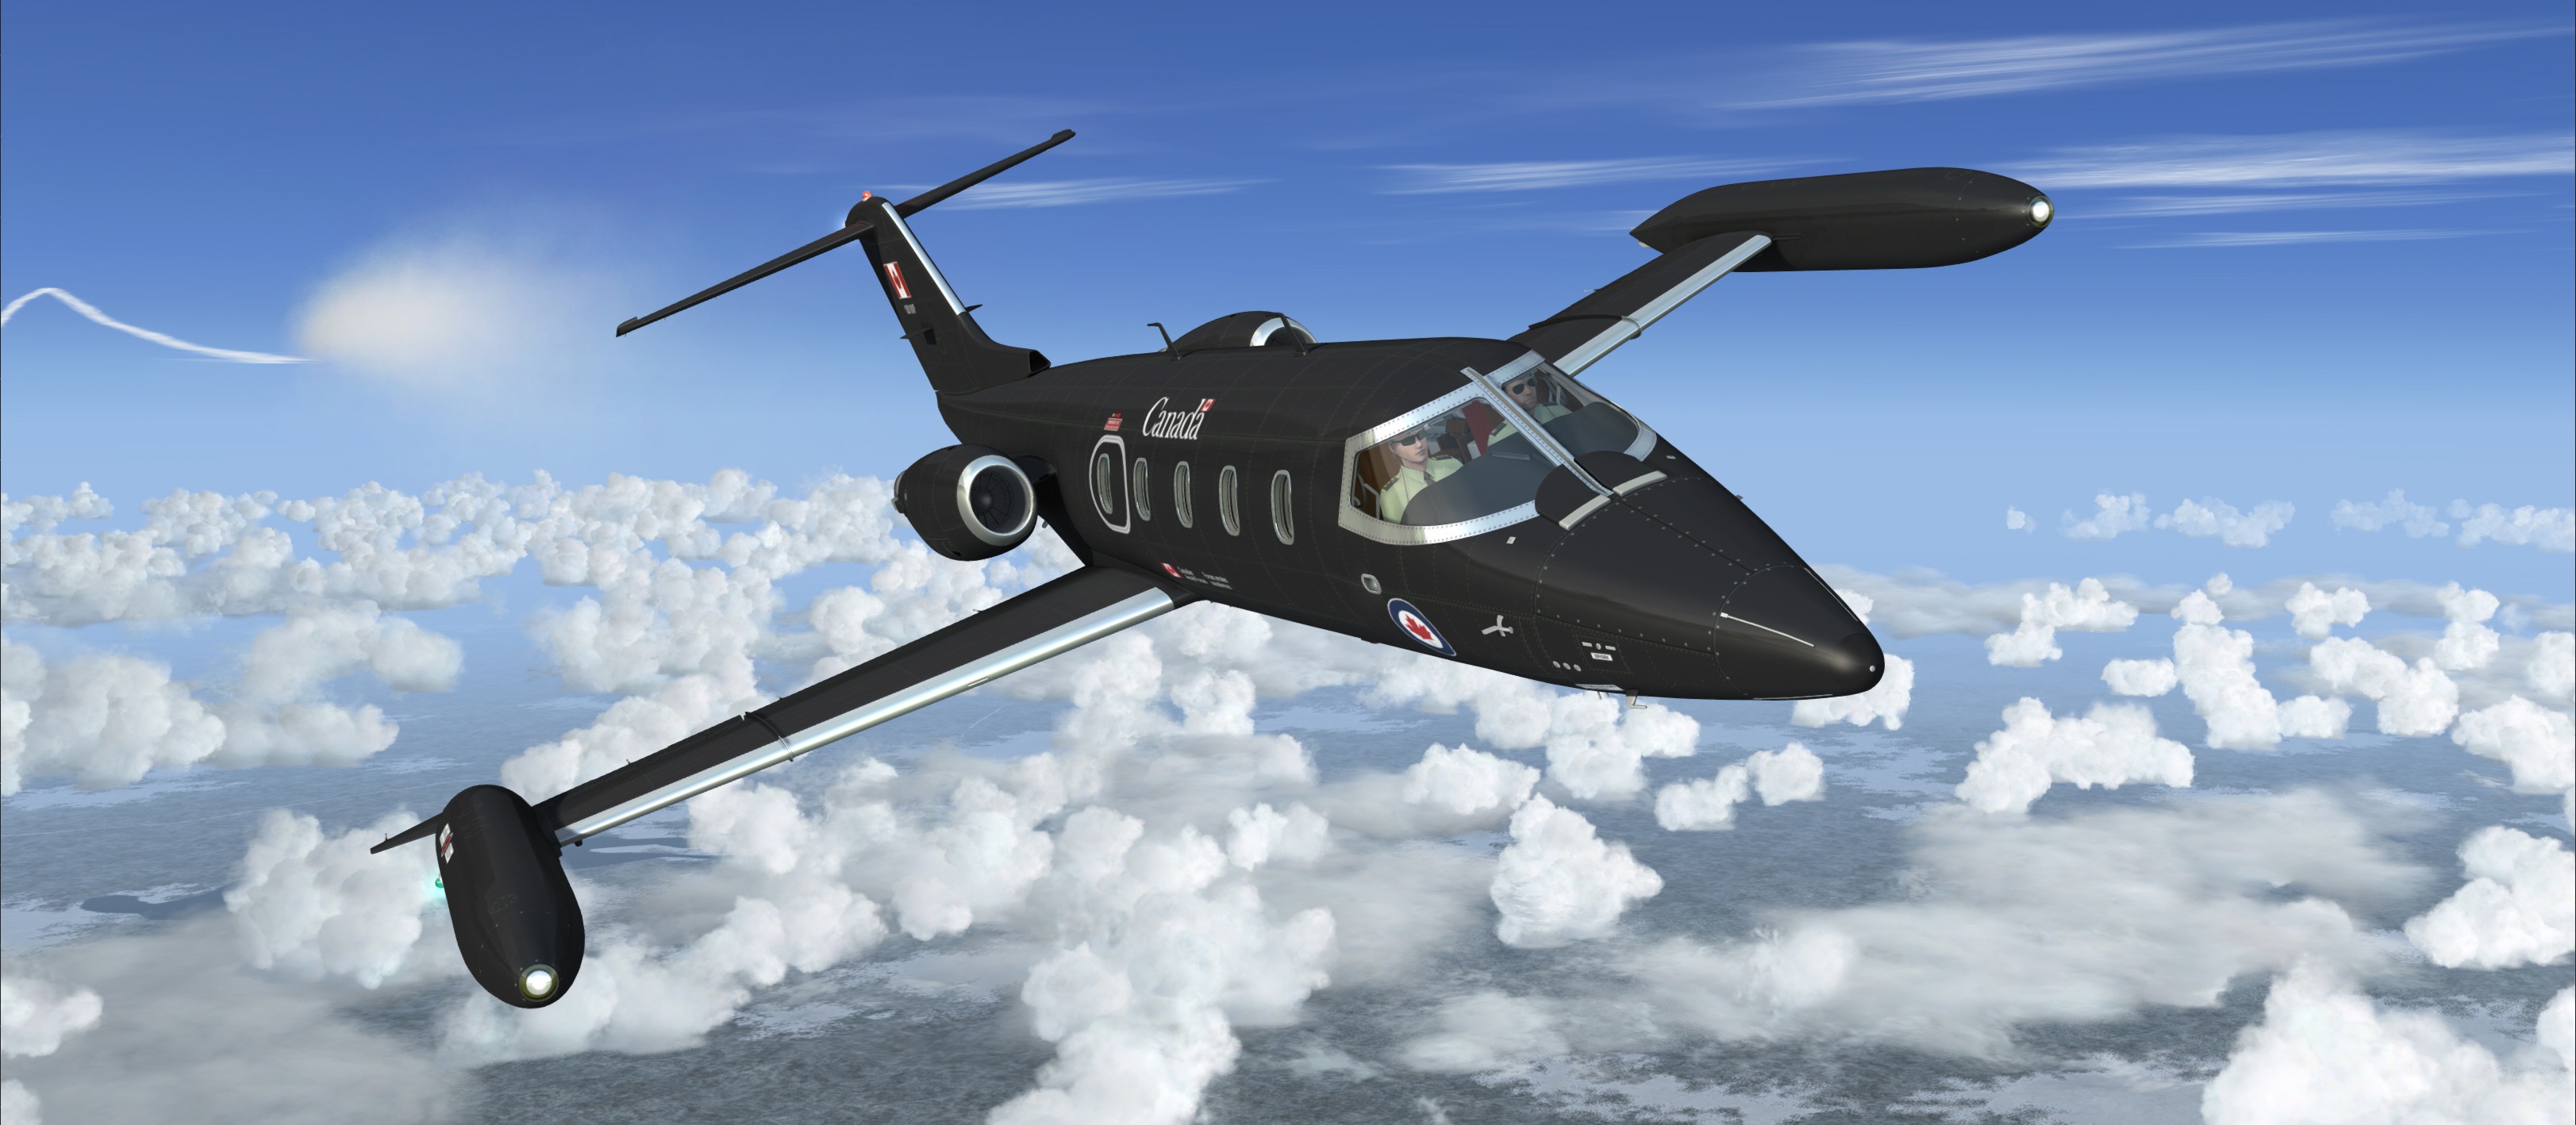 Xtreme Prototypes Shares Screenshots of Upcoming GLJ Learjet 25 SE v3.0